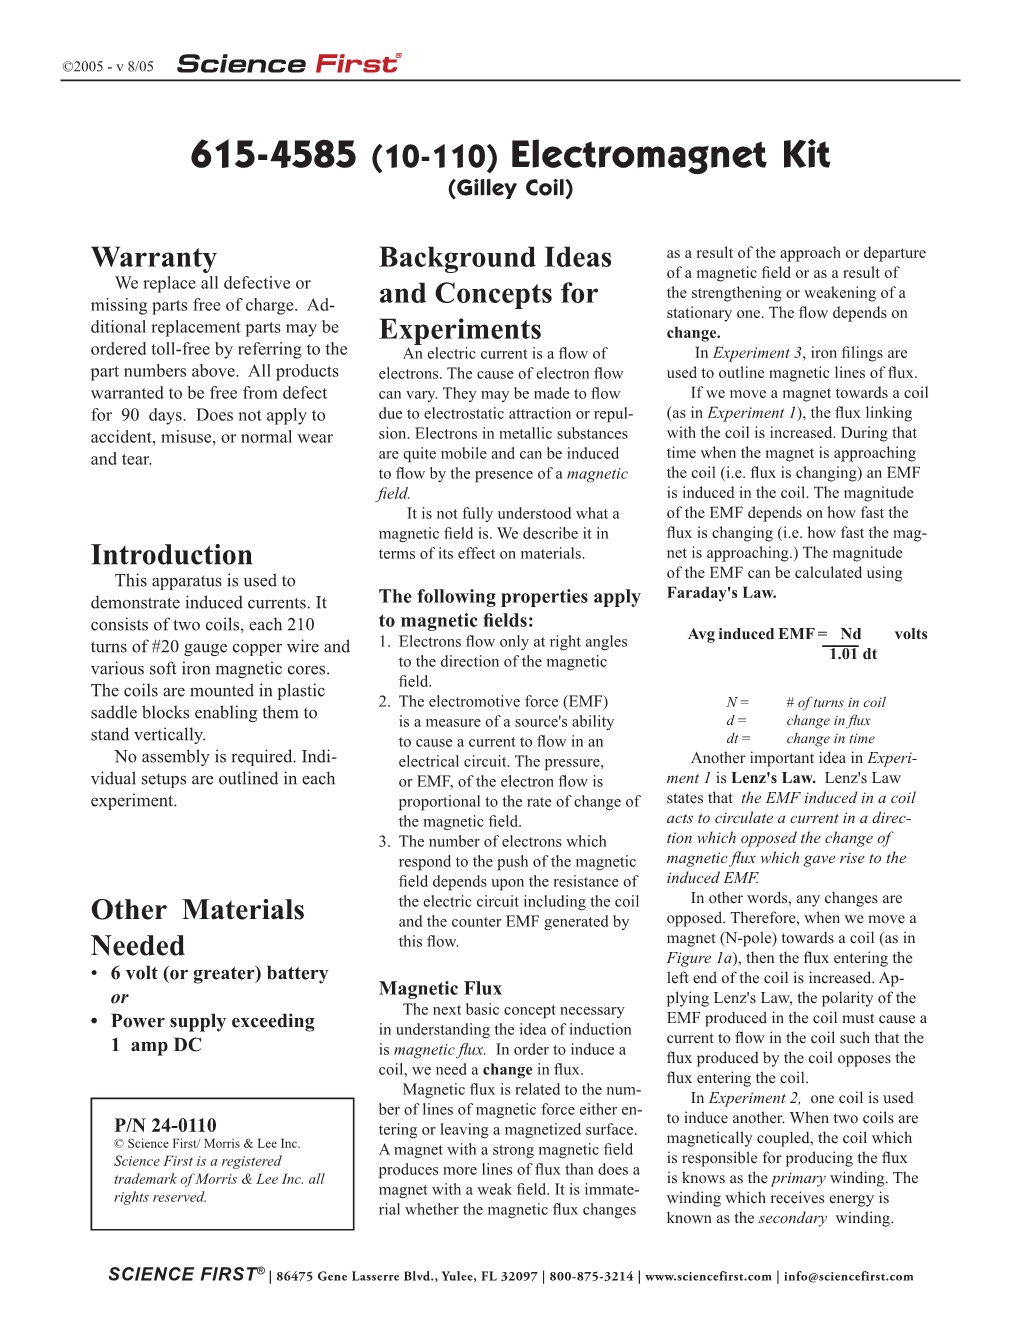 615-4585 (10-110) Electromagnet Kit (Gilley Coil)